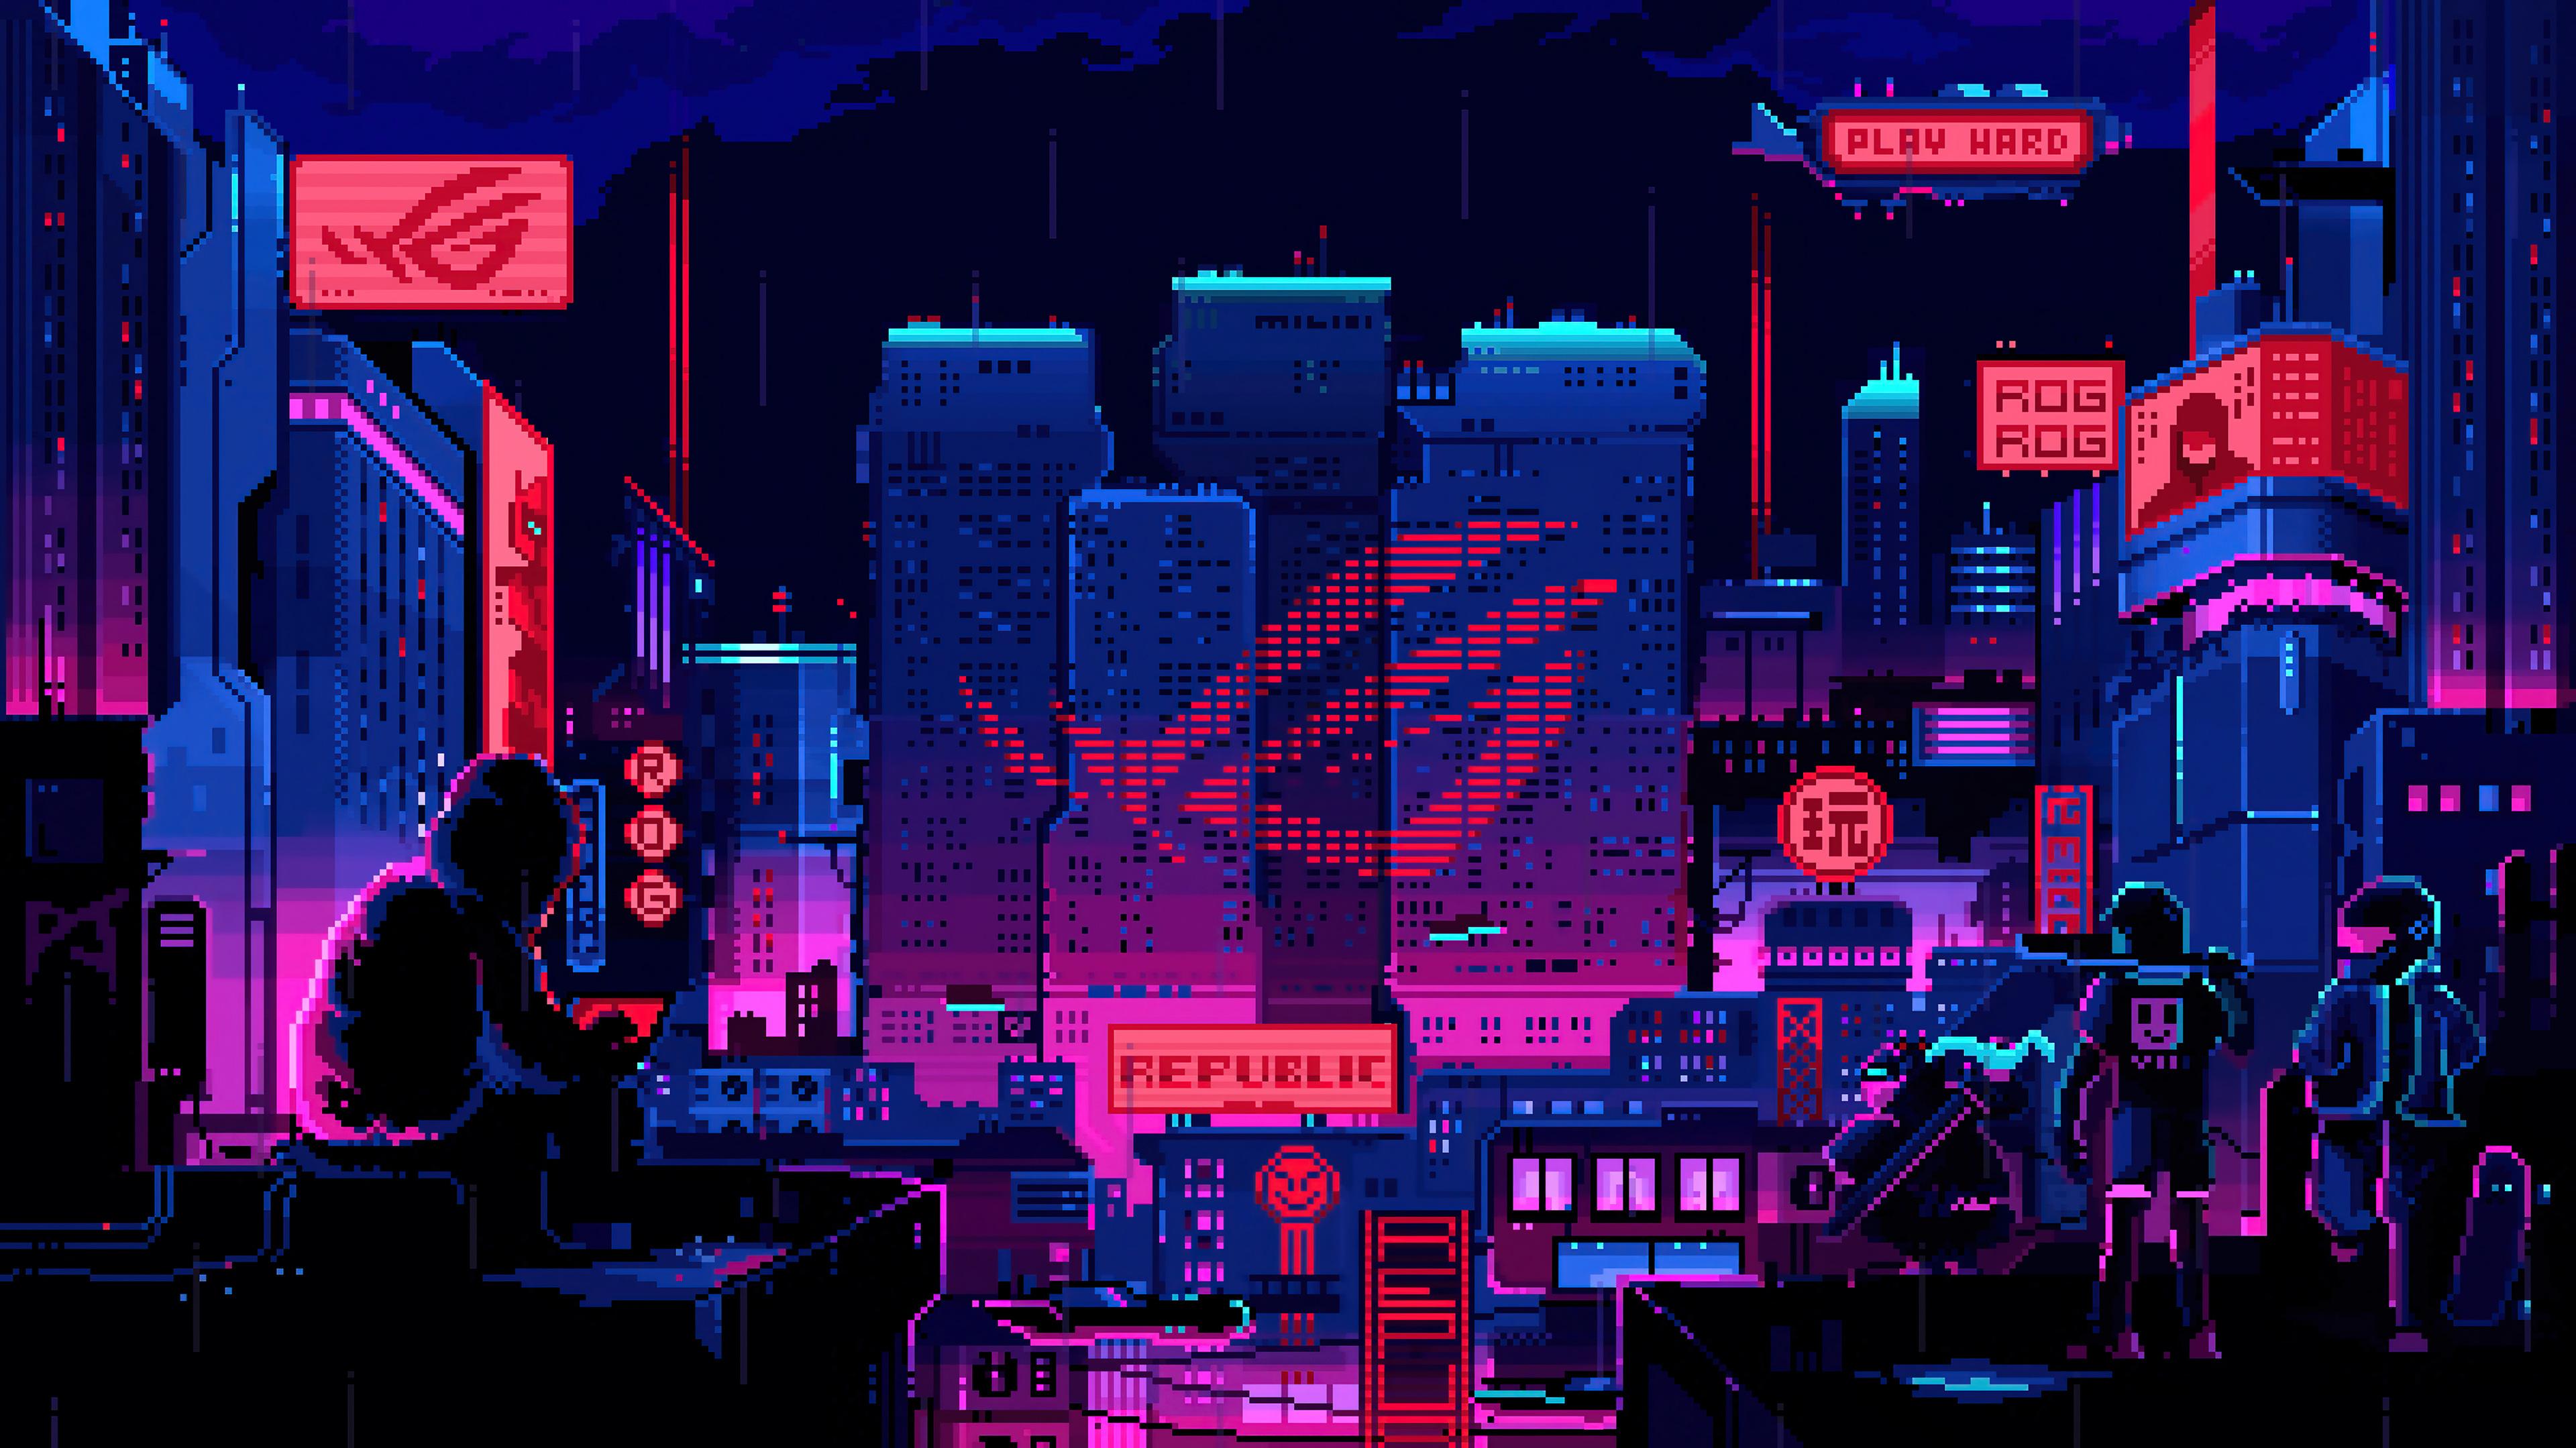 Rog Bit Pixel Logo Night City HD 4k Wallpaper